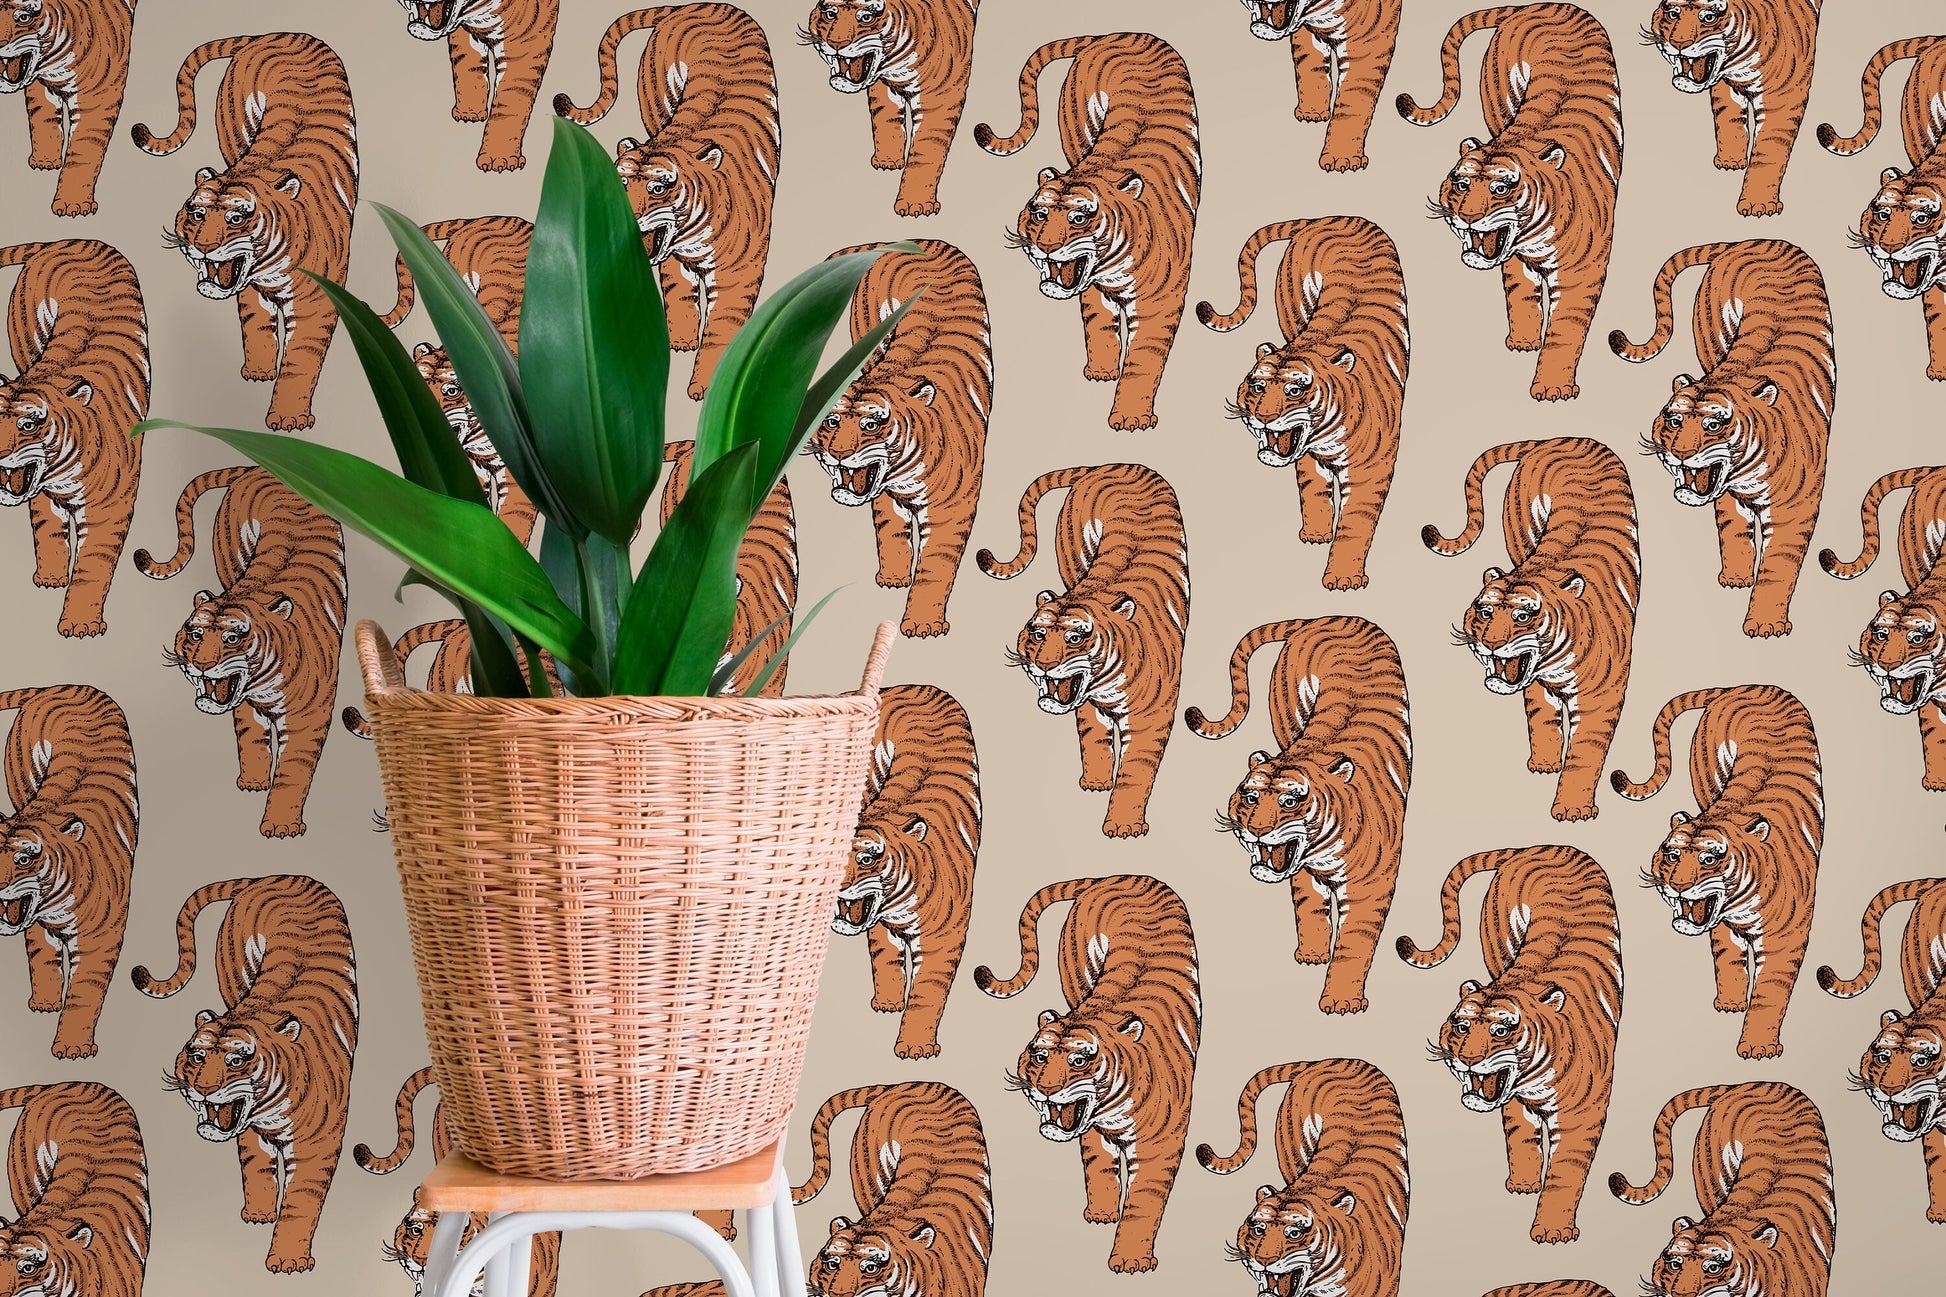 Boho Tiger Wallpaper Removable Peel and Stick Wallpaper, Animal Print Repositionable Peel and Stick Wallpaper - ZADI